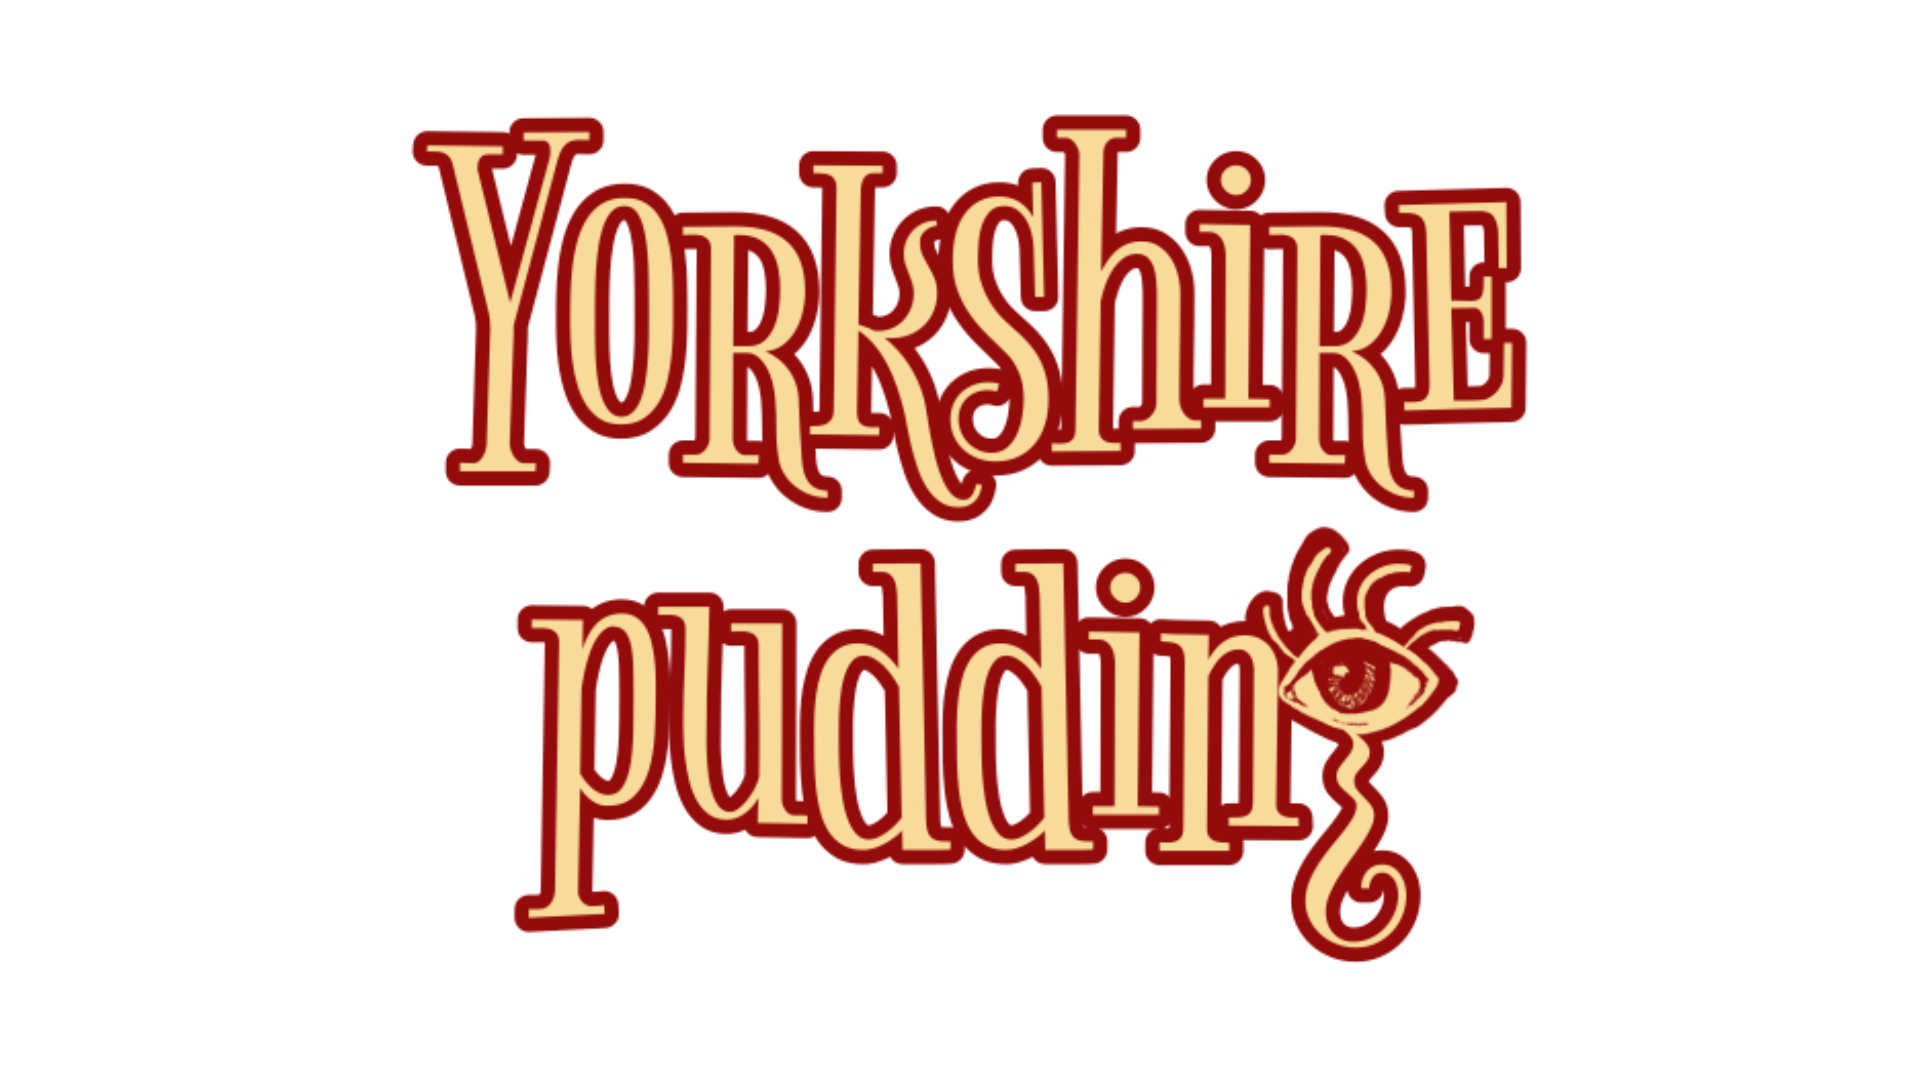 Yorkshire pudding 